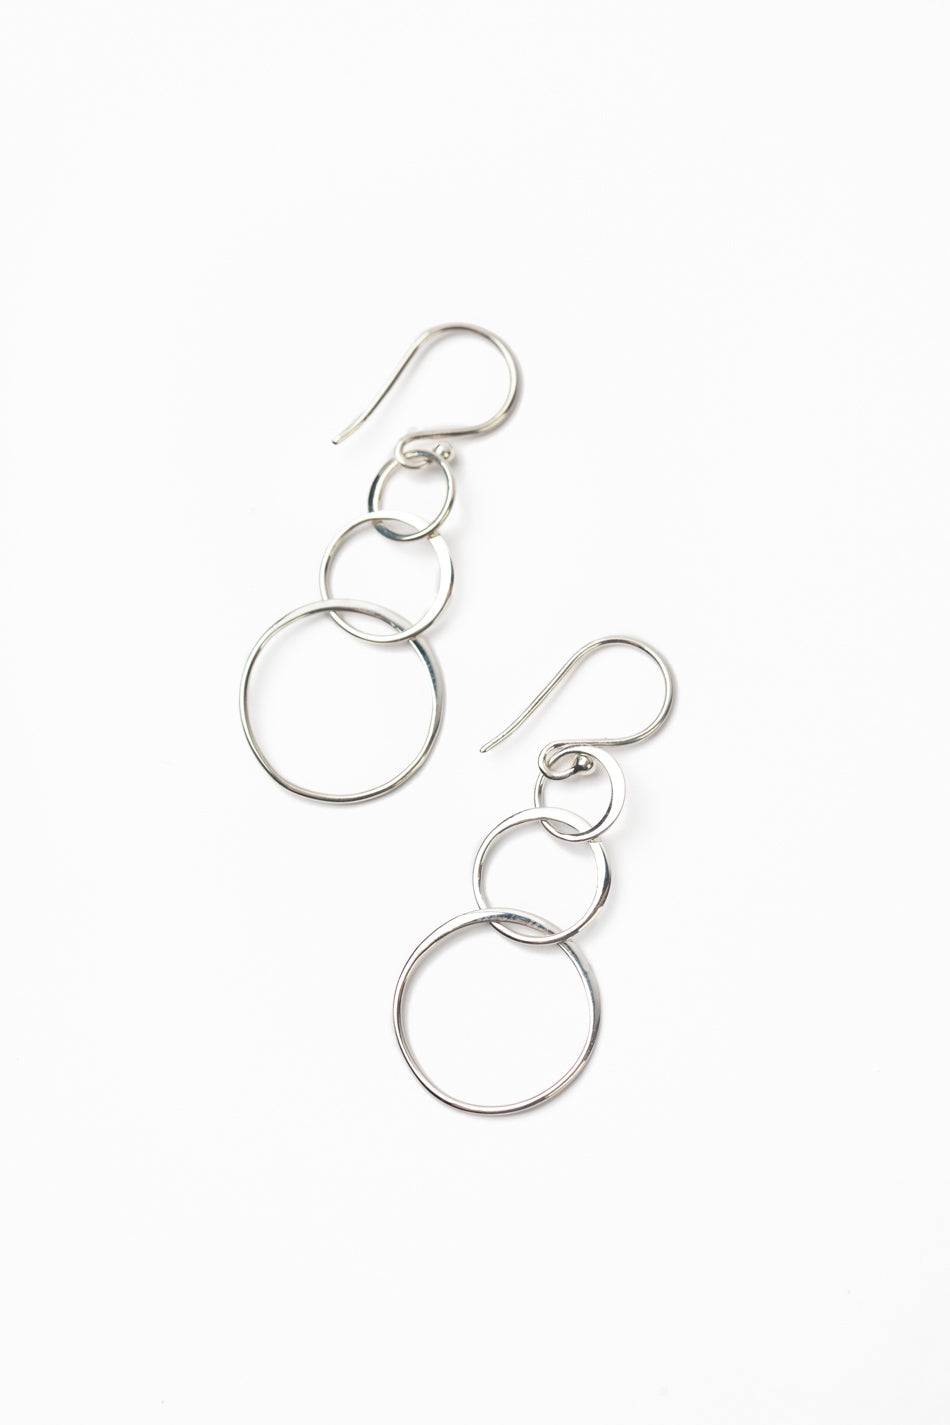 Embrace Sterling Silver Hoops Simple Earrings